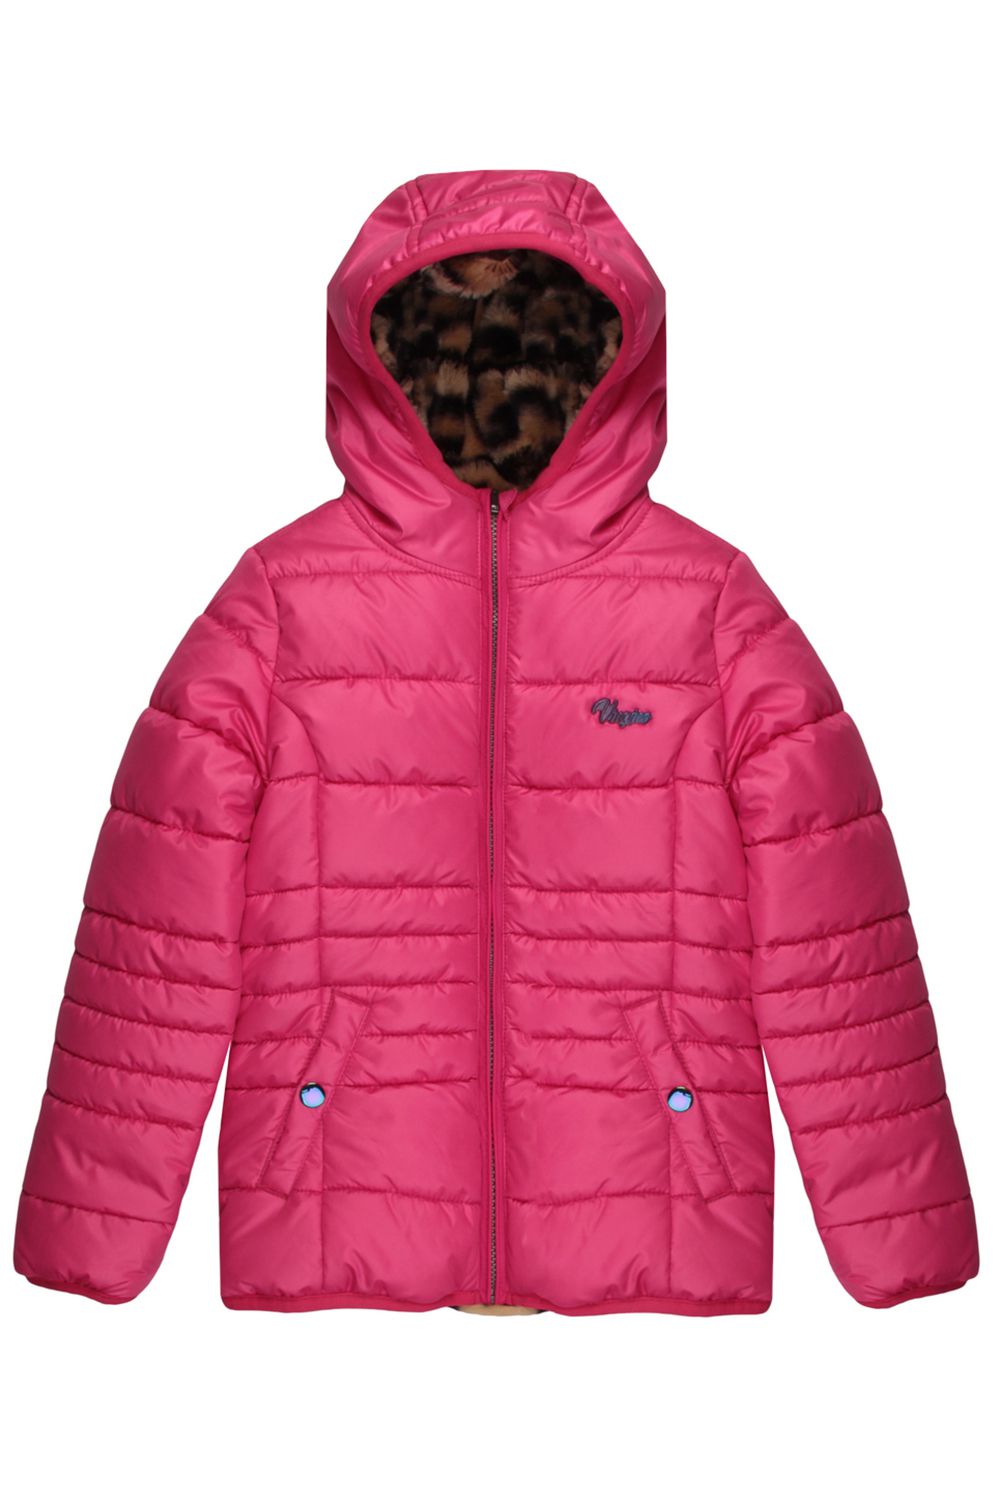 Куртка Vingino, размер 128, цвет розовый AW19KGN10004 - фото 1